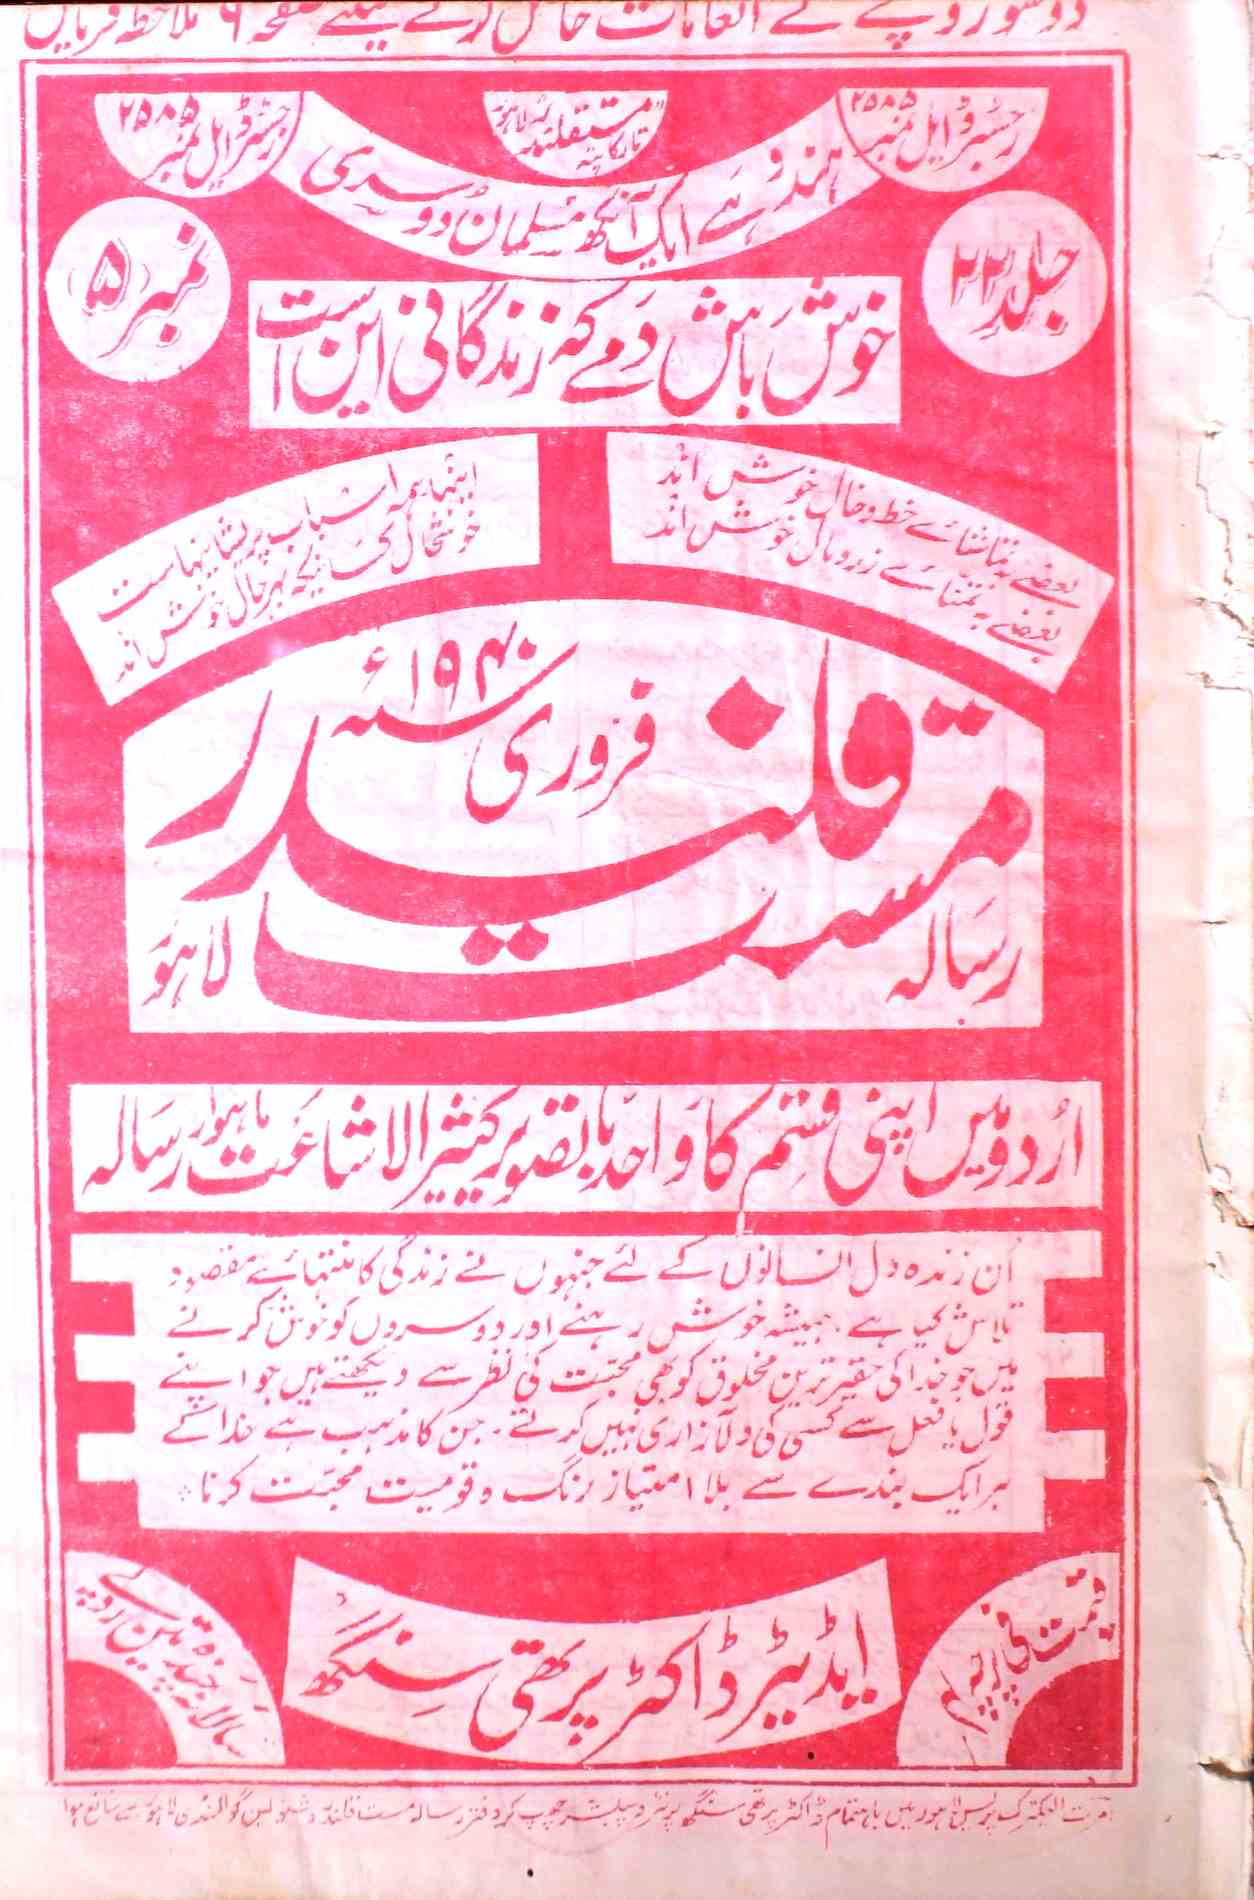 Mast Qalandar Jild 22 No 5 Febrauary 1940-SVK-Shumara Number-005